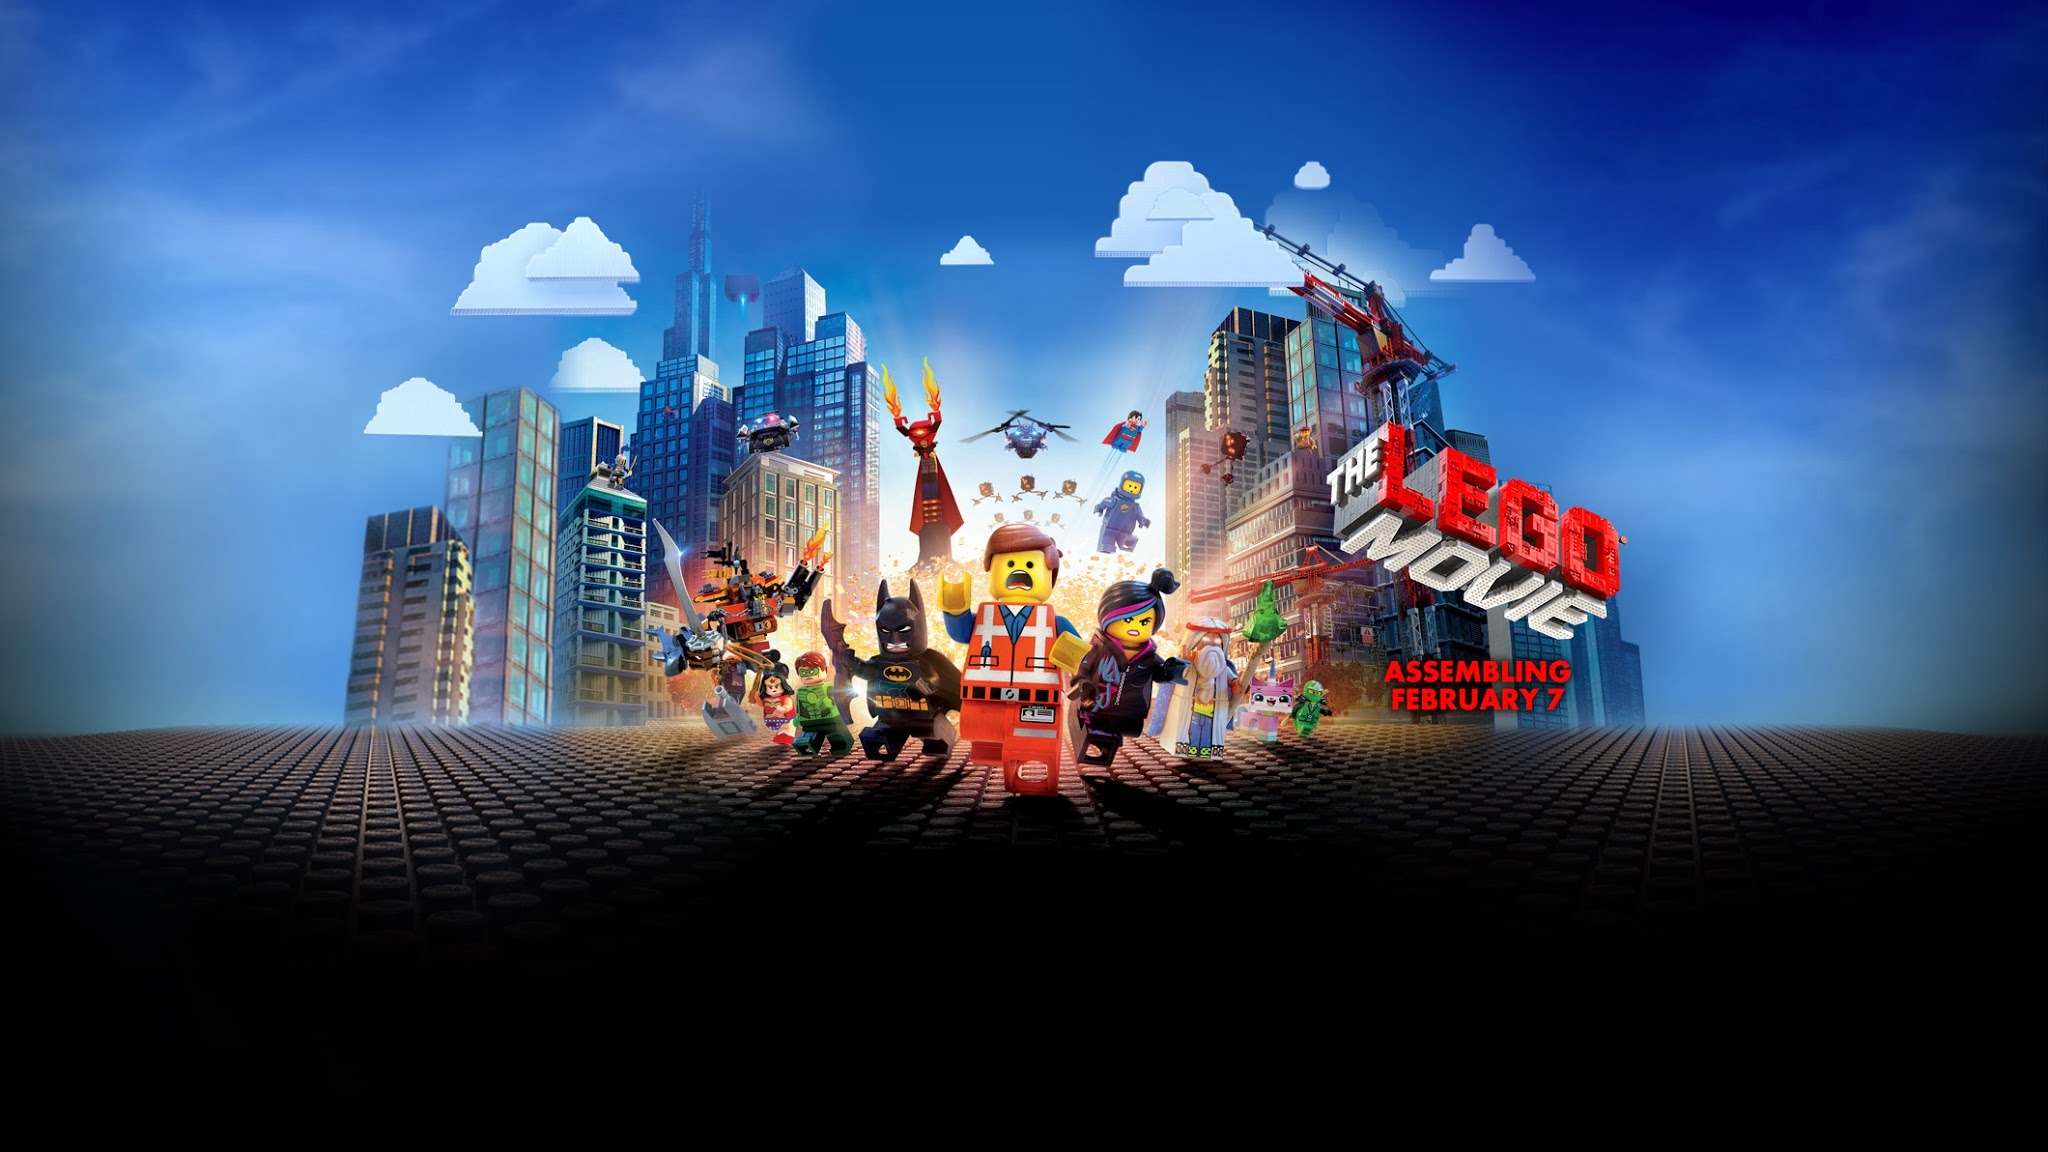 Lego Movie Wallpaper 33381 2048x1152 px